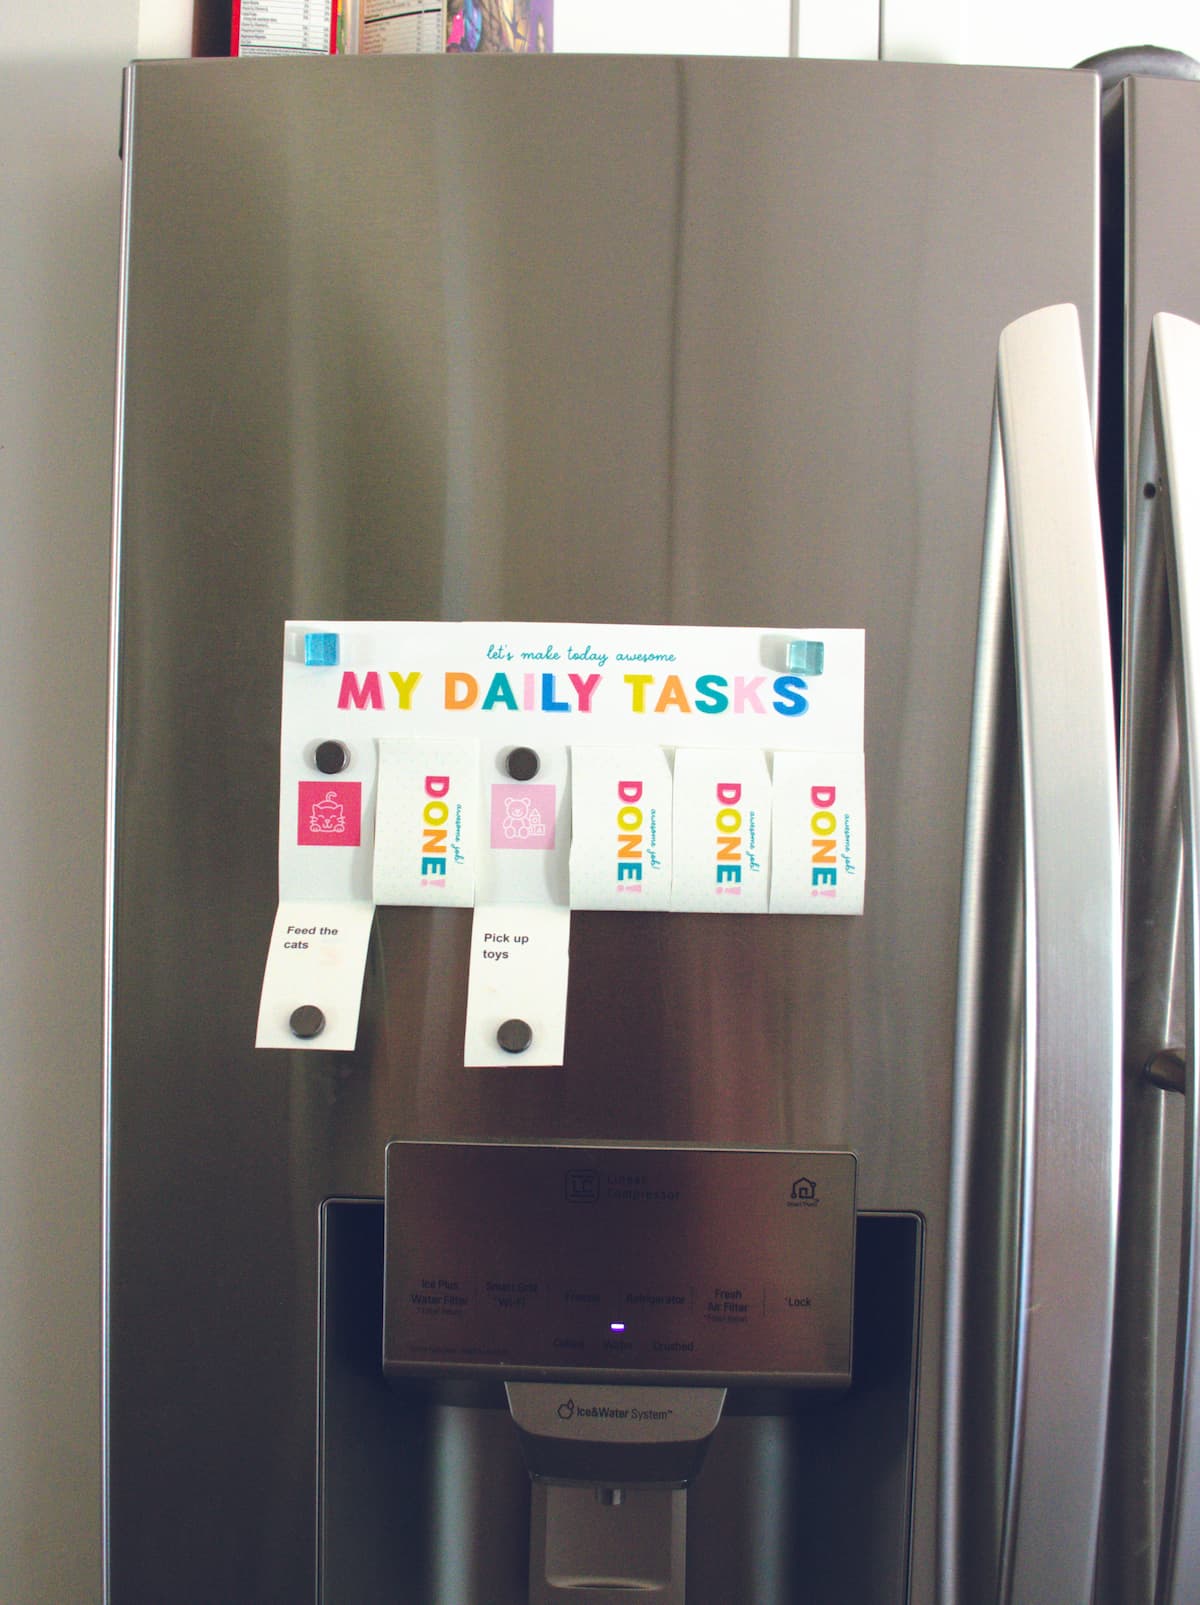 Printable daily task chore chart on refrigerator.